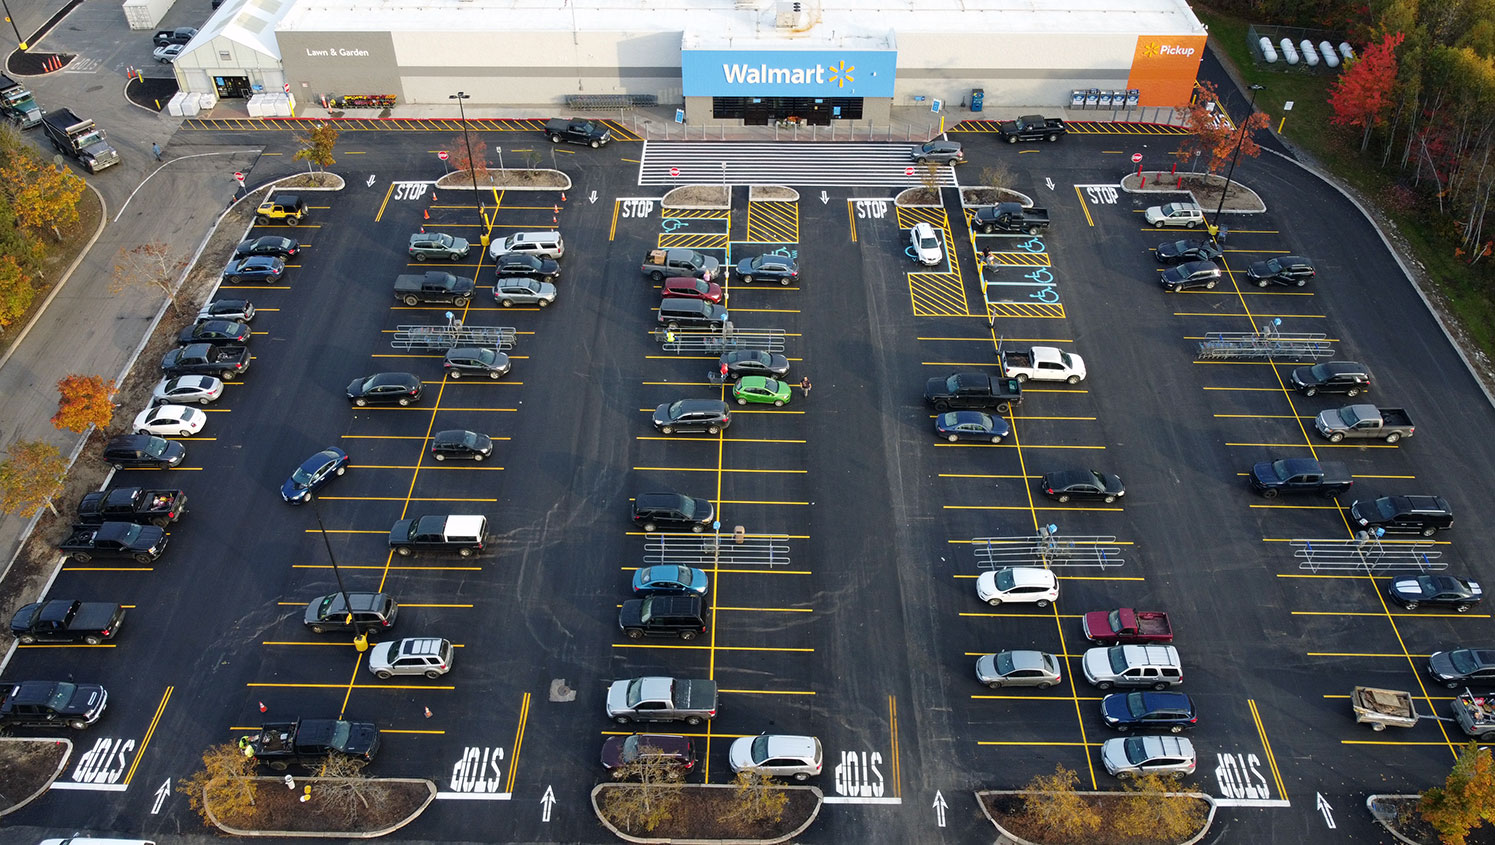 Walmart Parking Lot Line Striping